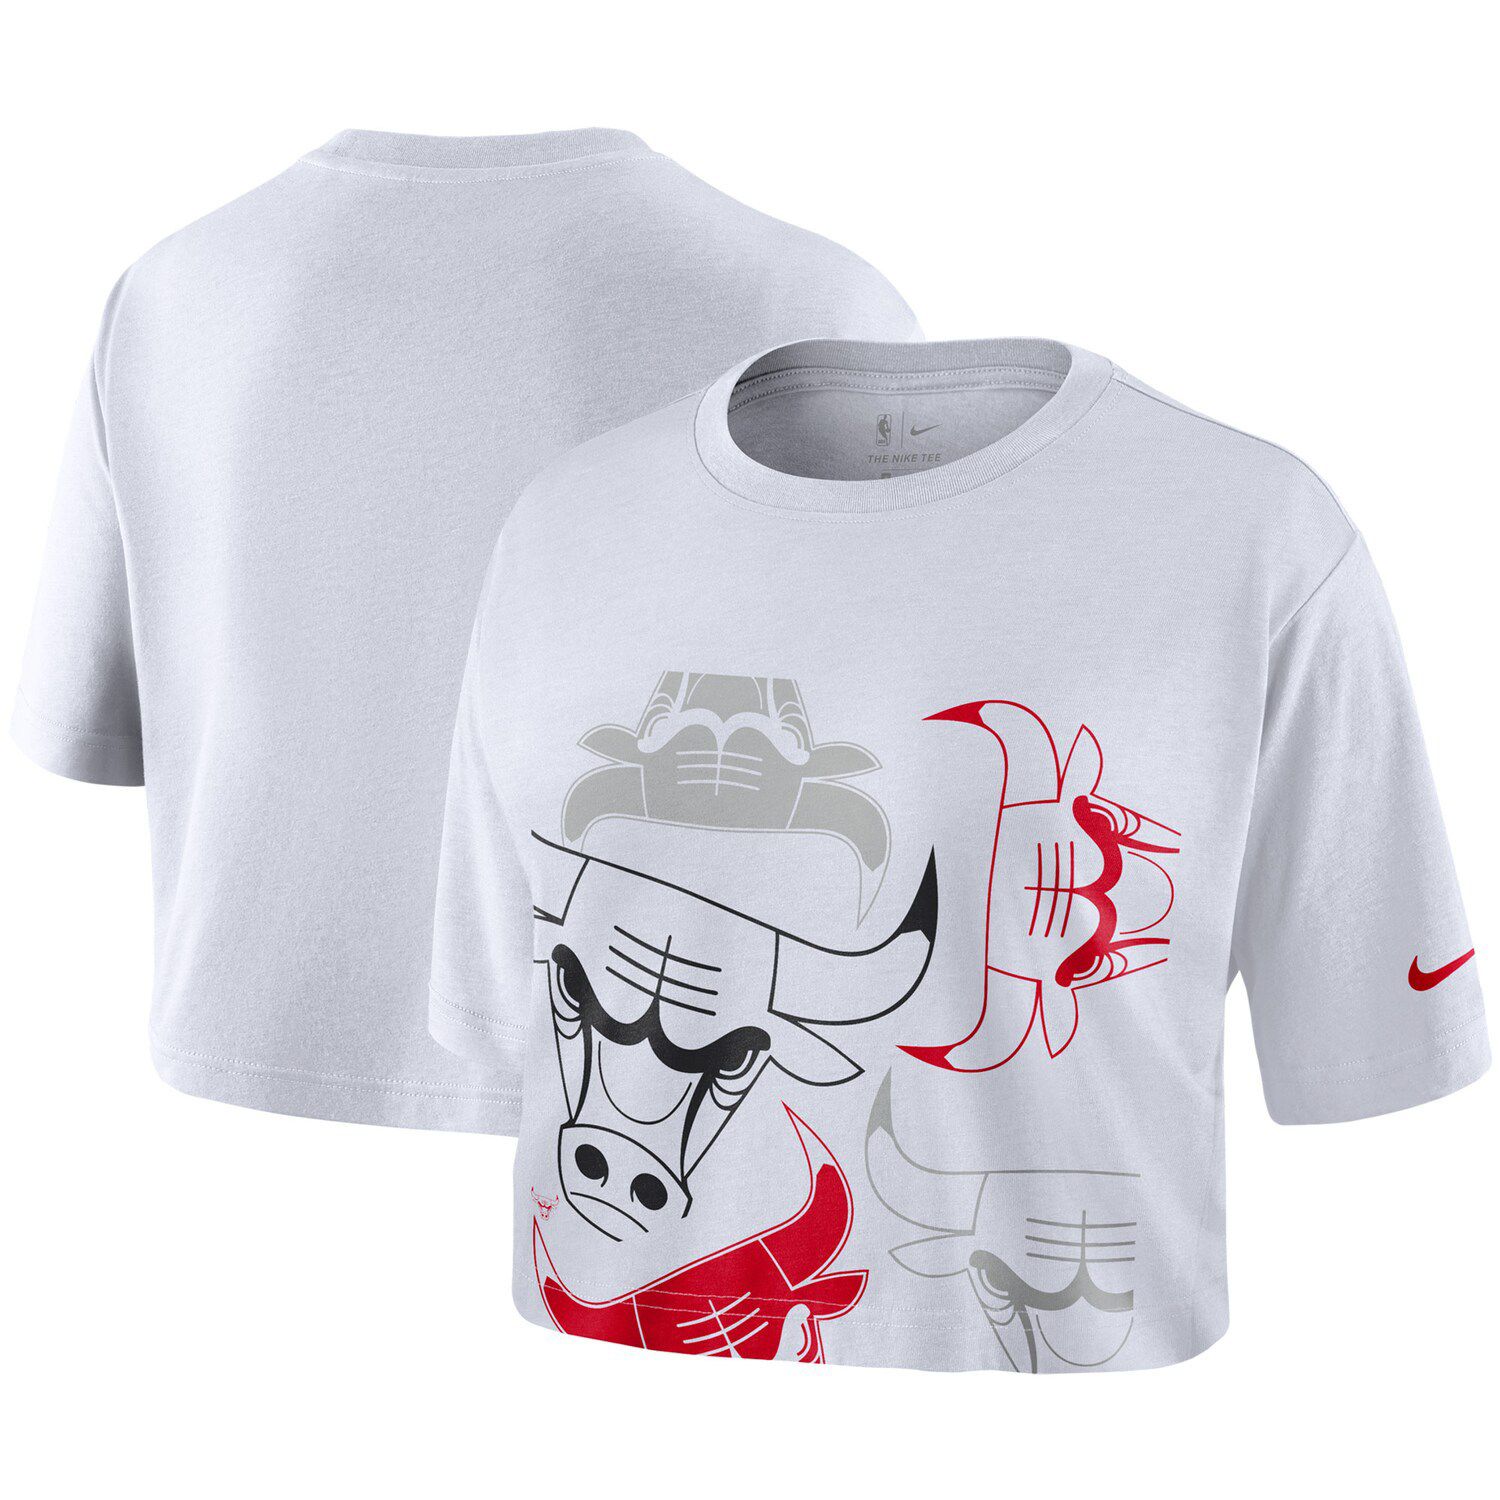 Nike White Chicago Bulls Cropped T-Shirt